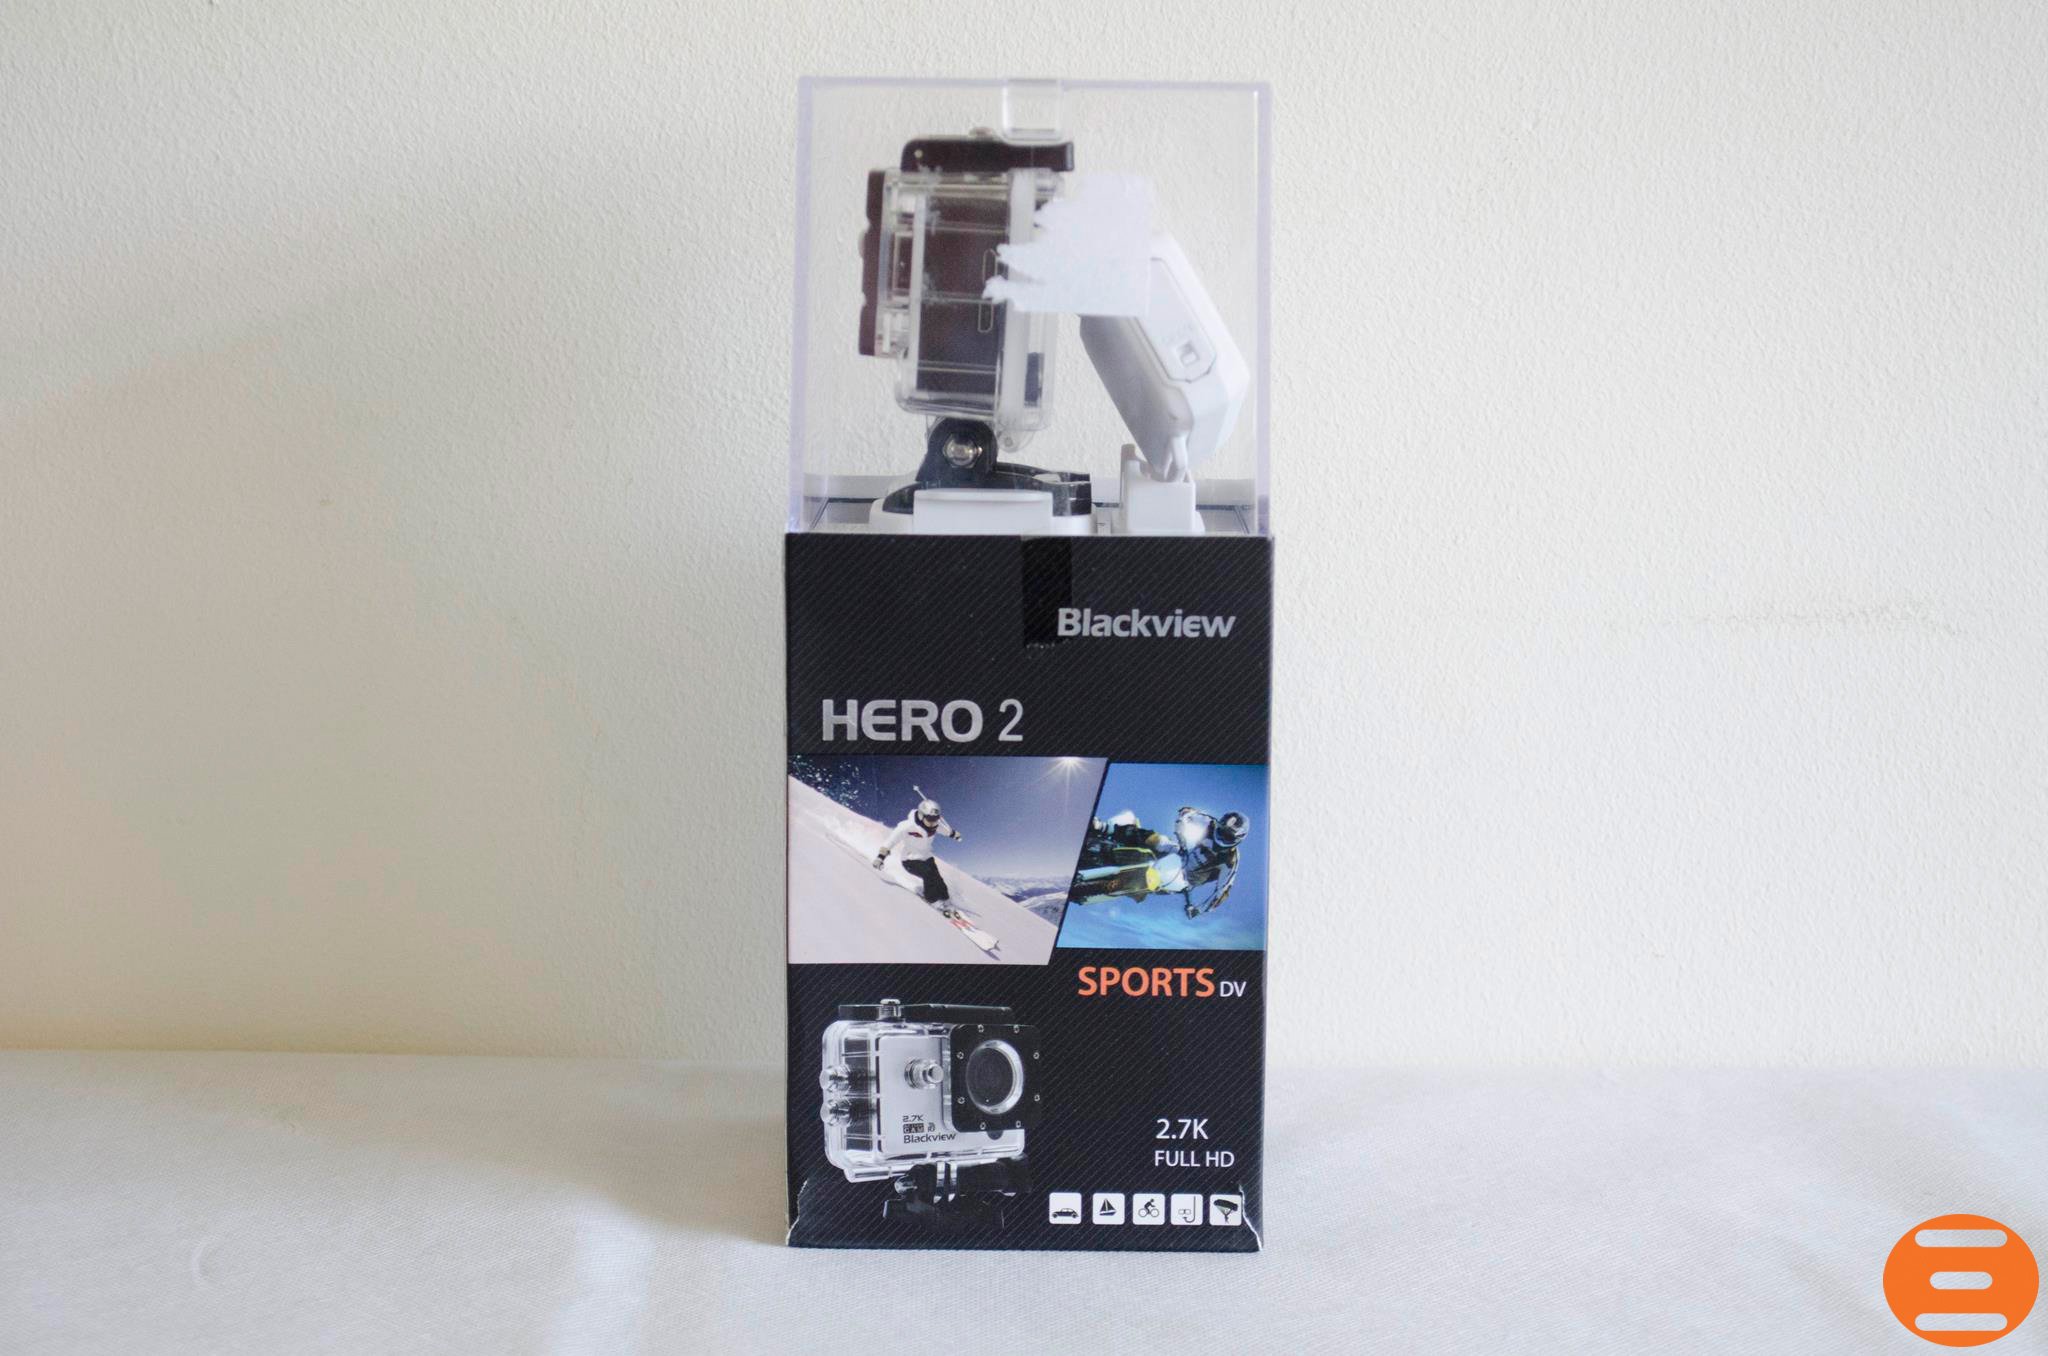 Blackview-Hero-2-2.7K-Full-HD-Action-Camera-